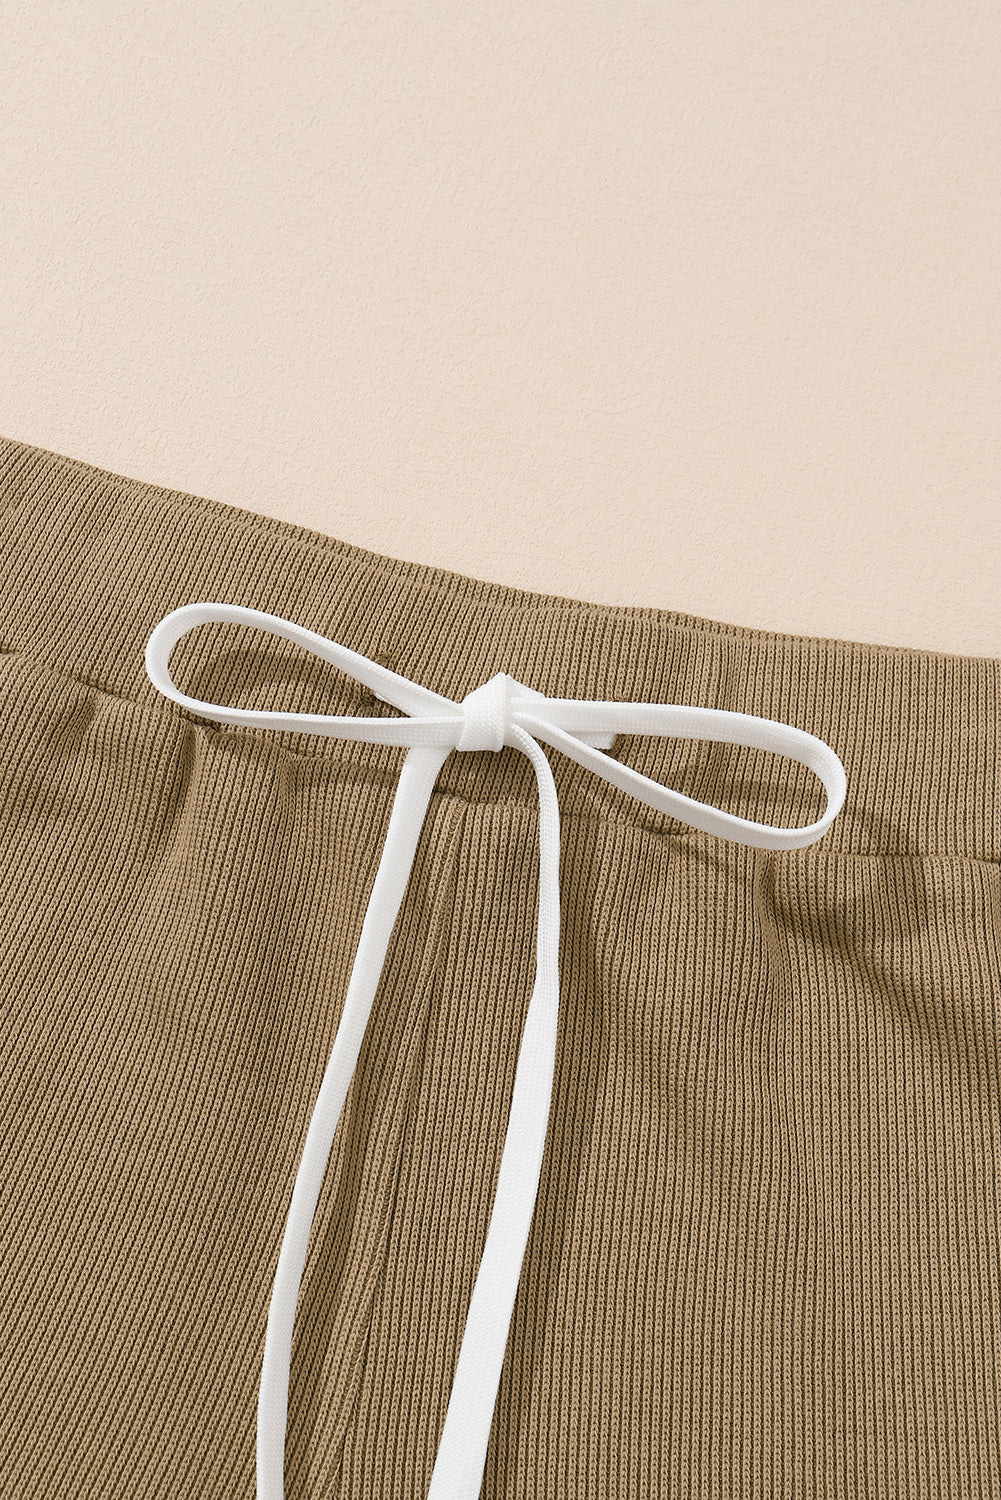 Khaki Exposed Seam Textured Long Sleeve Top Shorts Set